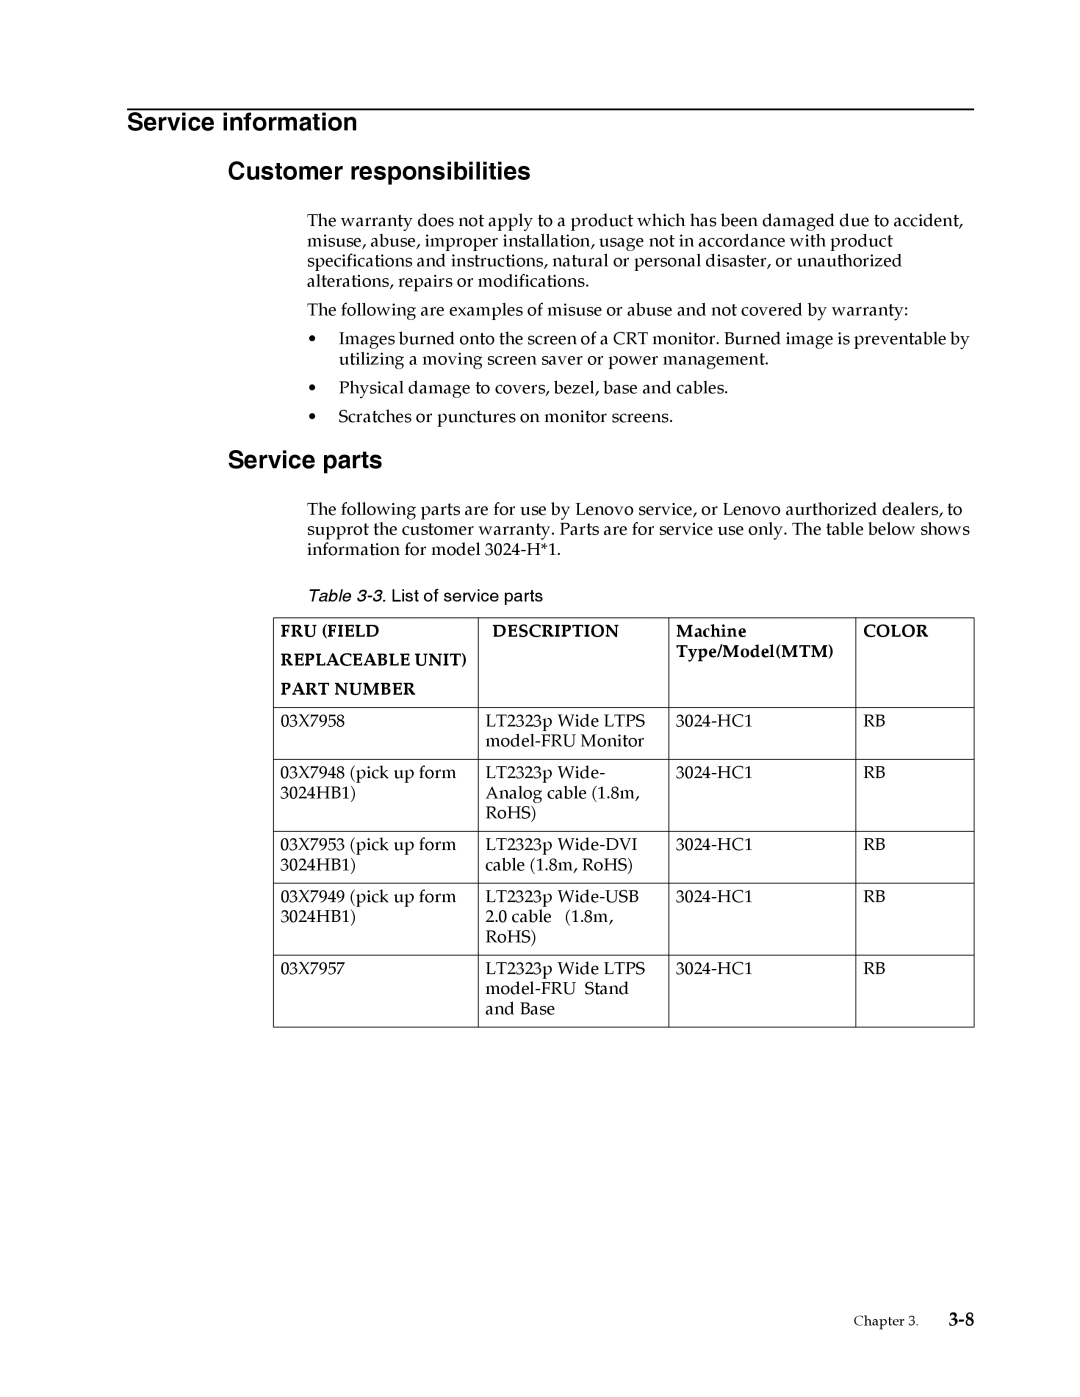 Lenovo 3024HC1 manual Service information Customer responsibilities, Service parts, Fru Field, Description, Machine, Color 